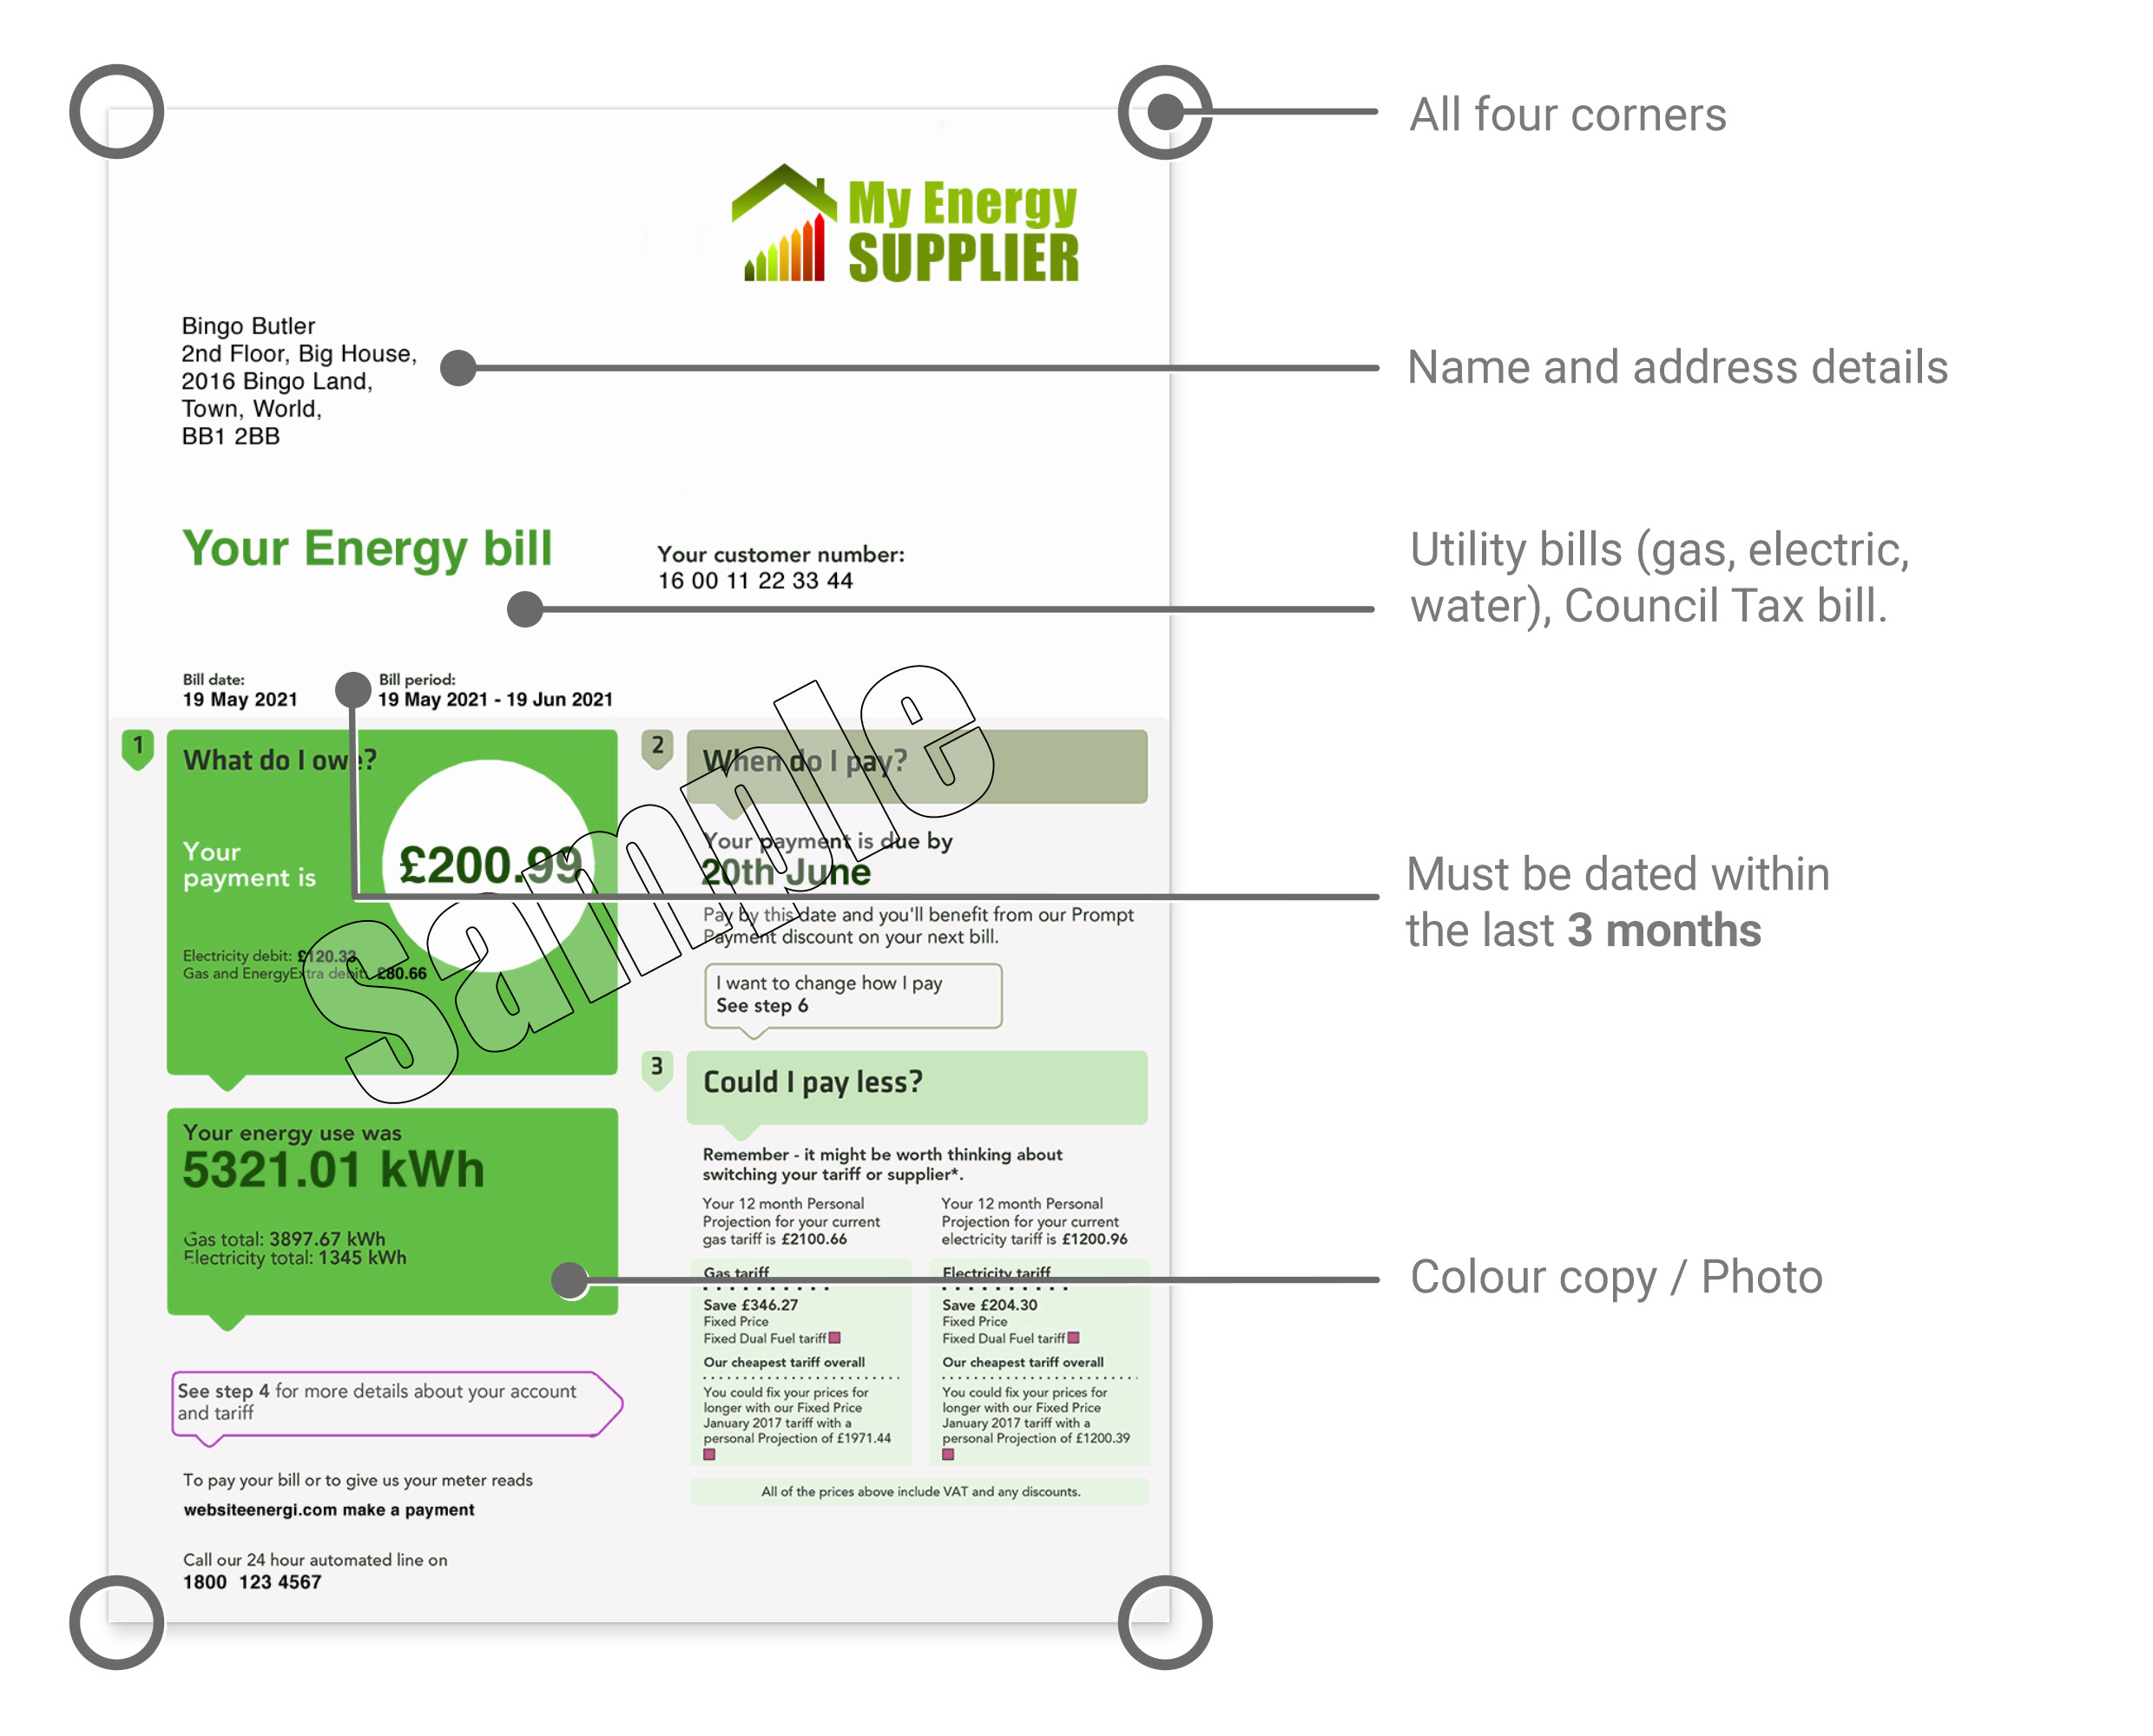 utility-bill-document-details.jpg